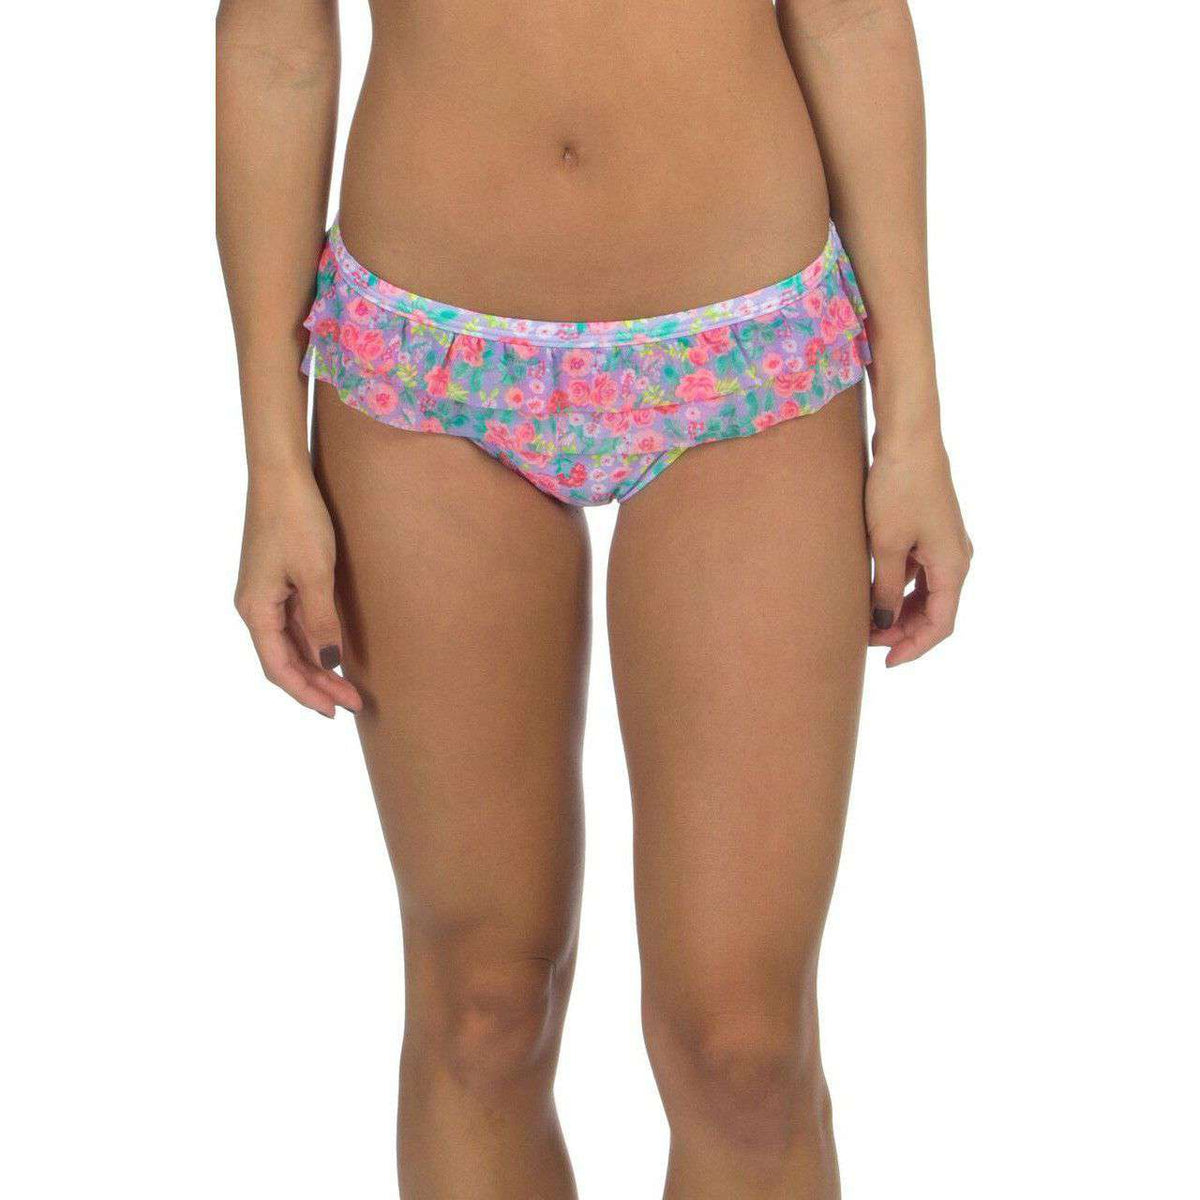 Floral Hipster Ruffle Bikini Bottom by Lauren James - Country Club Prep